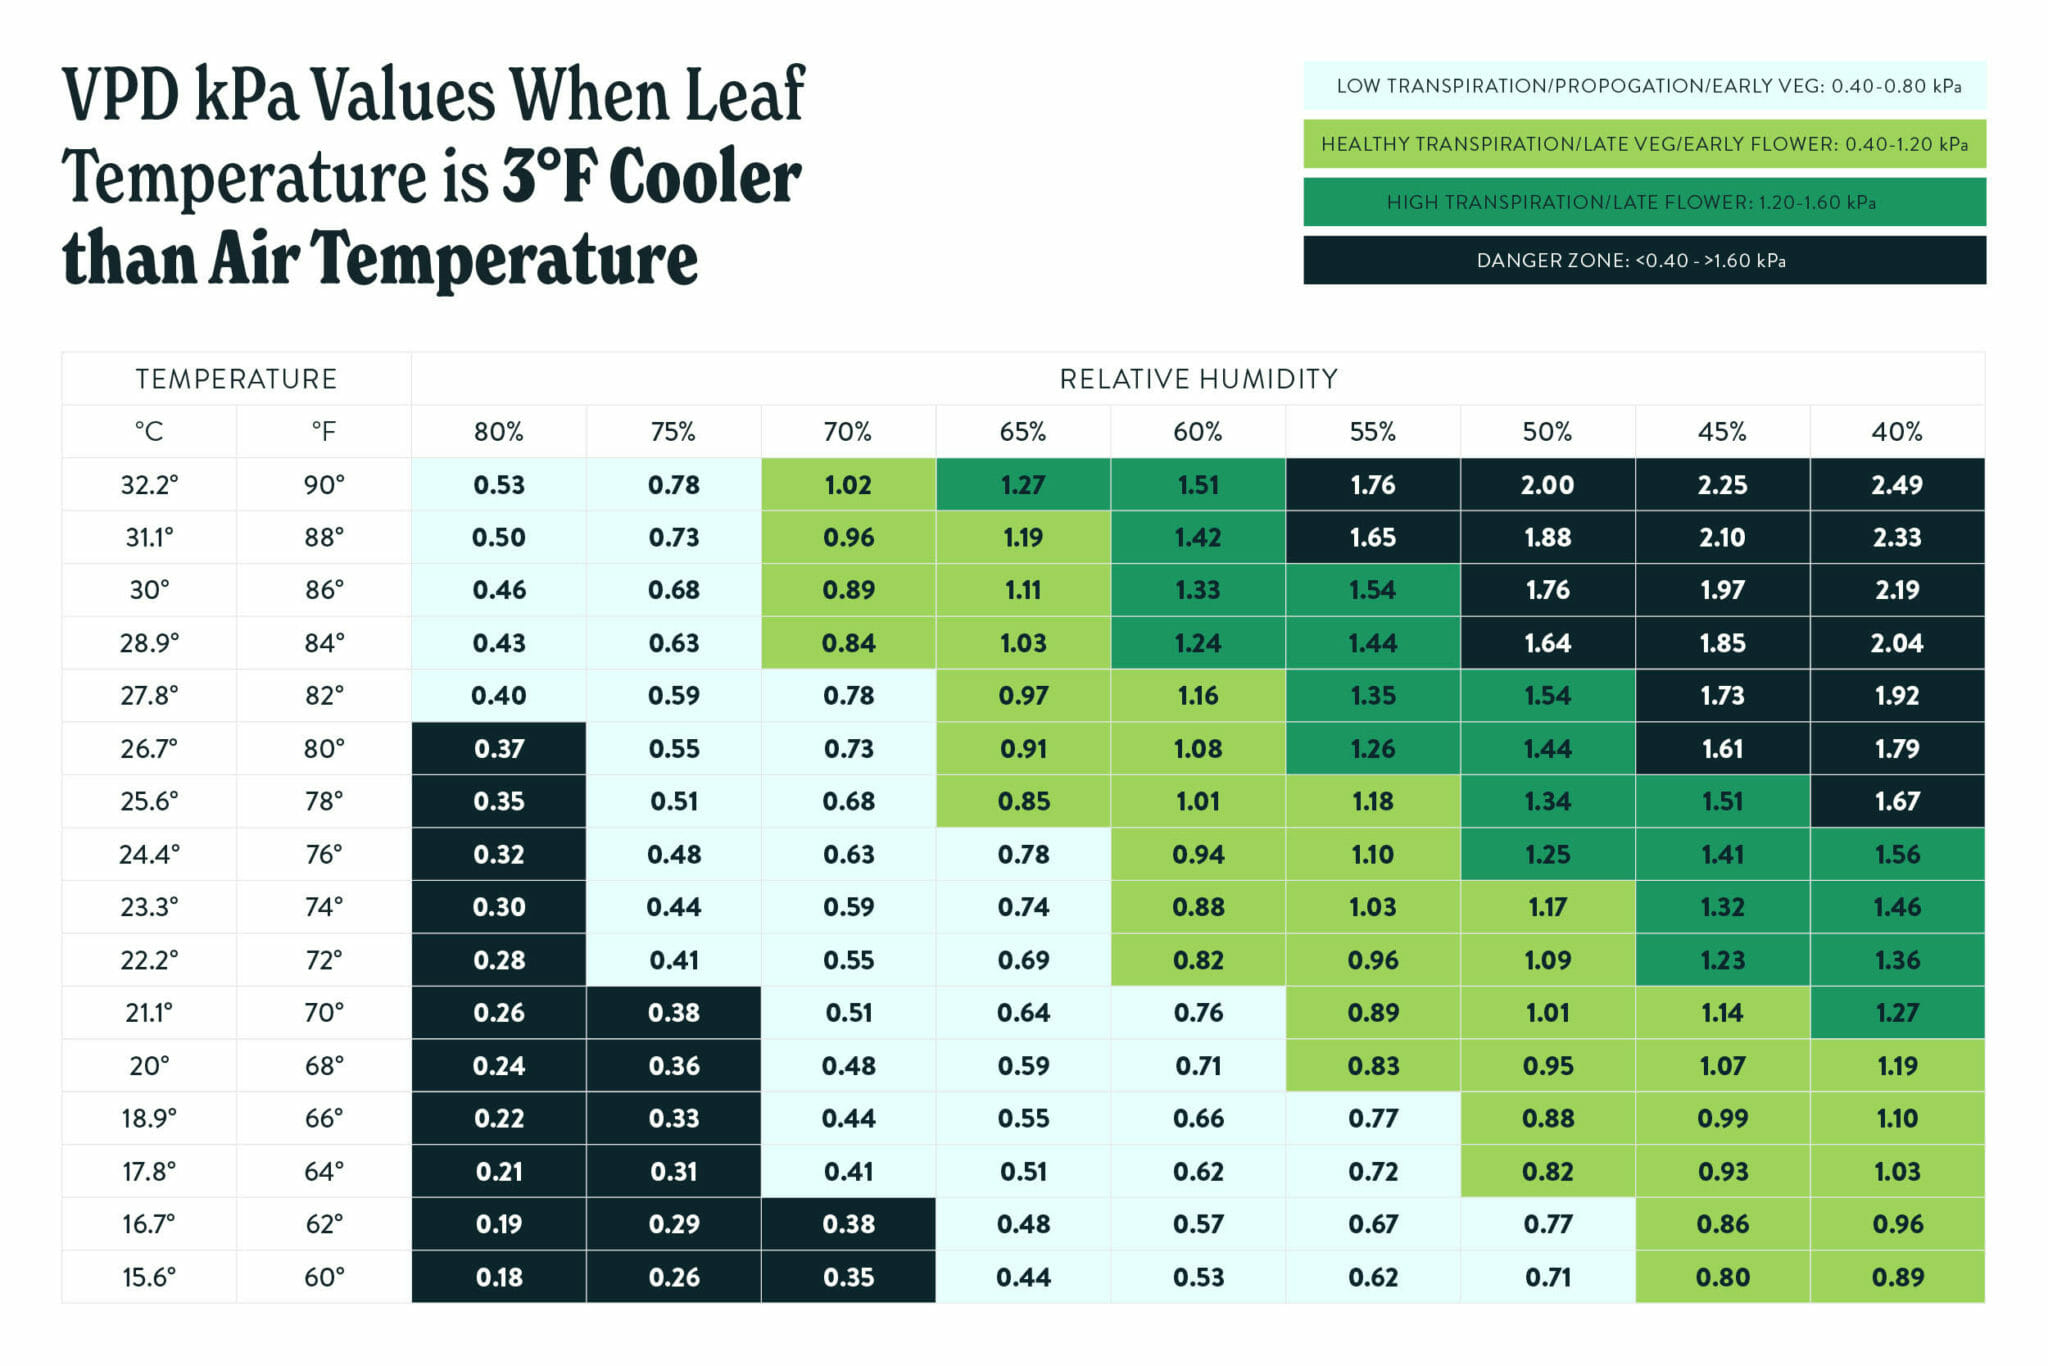 VPD kPa values when leaf temperature is 3F cooler than air temperature